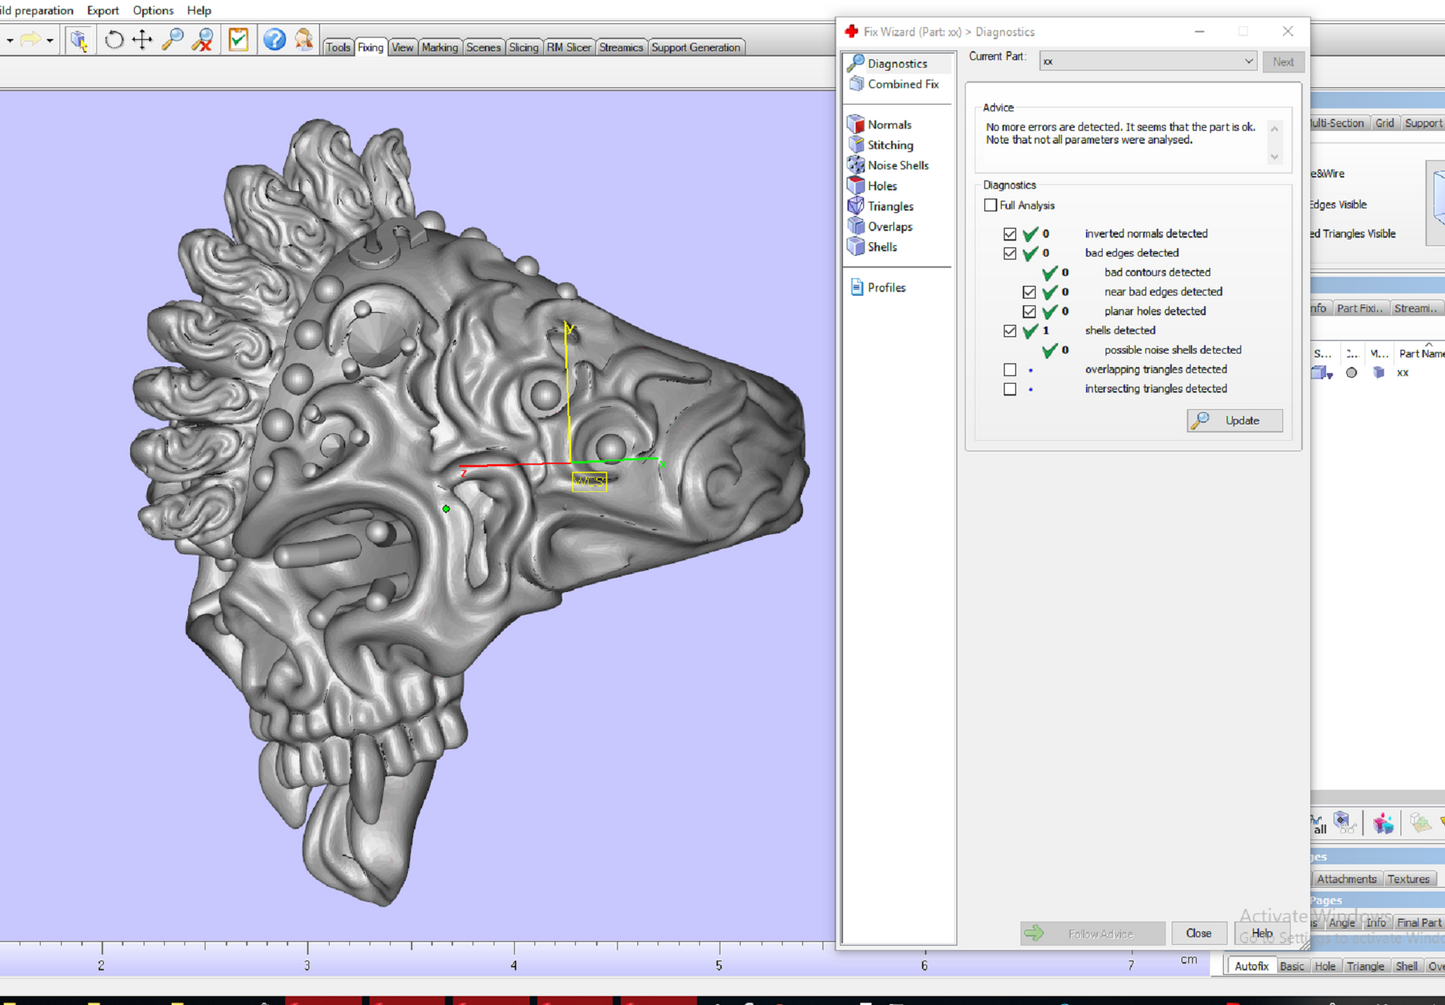 Badass Gothic Punk Skull Ring With Gems CAD Design-GP34-GS 3D PRINTED MODEL